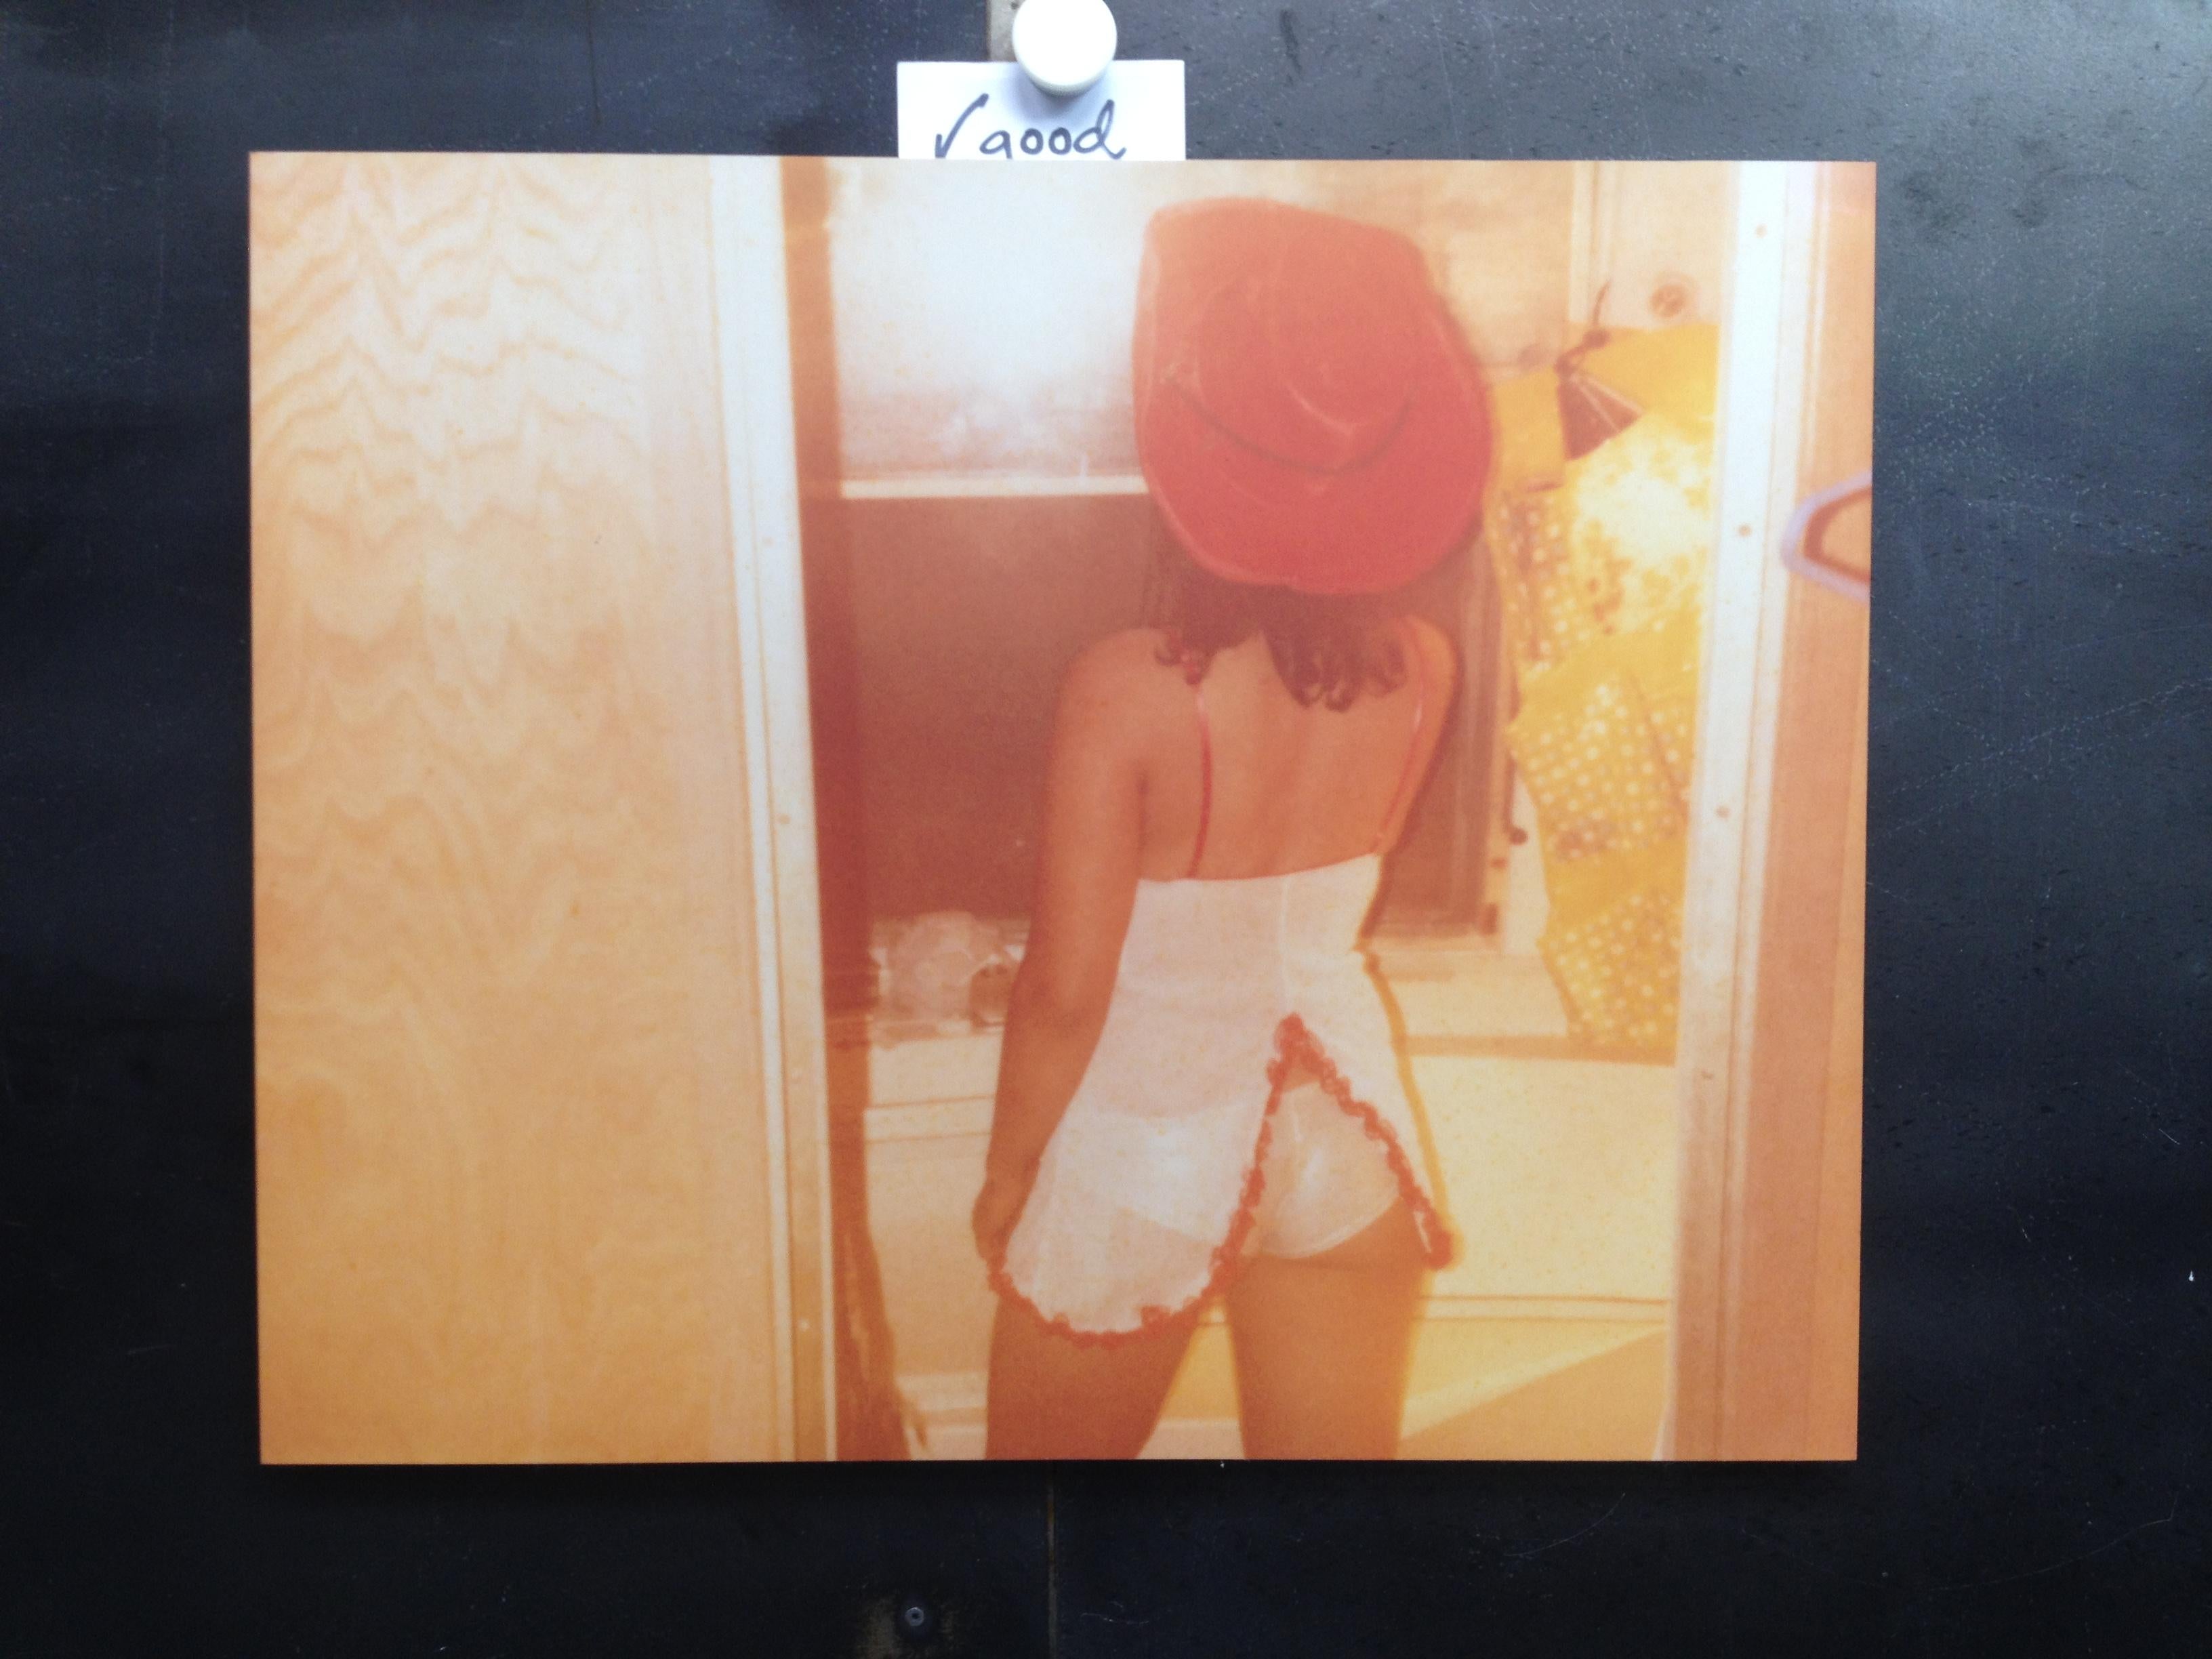 'Margarita smokes in Bathroom' (Till Death do us Part) - Polaroid, Contemporary - Photograph by Stefanie Schneider